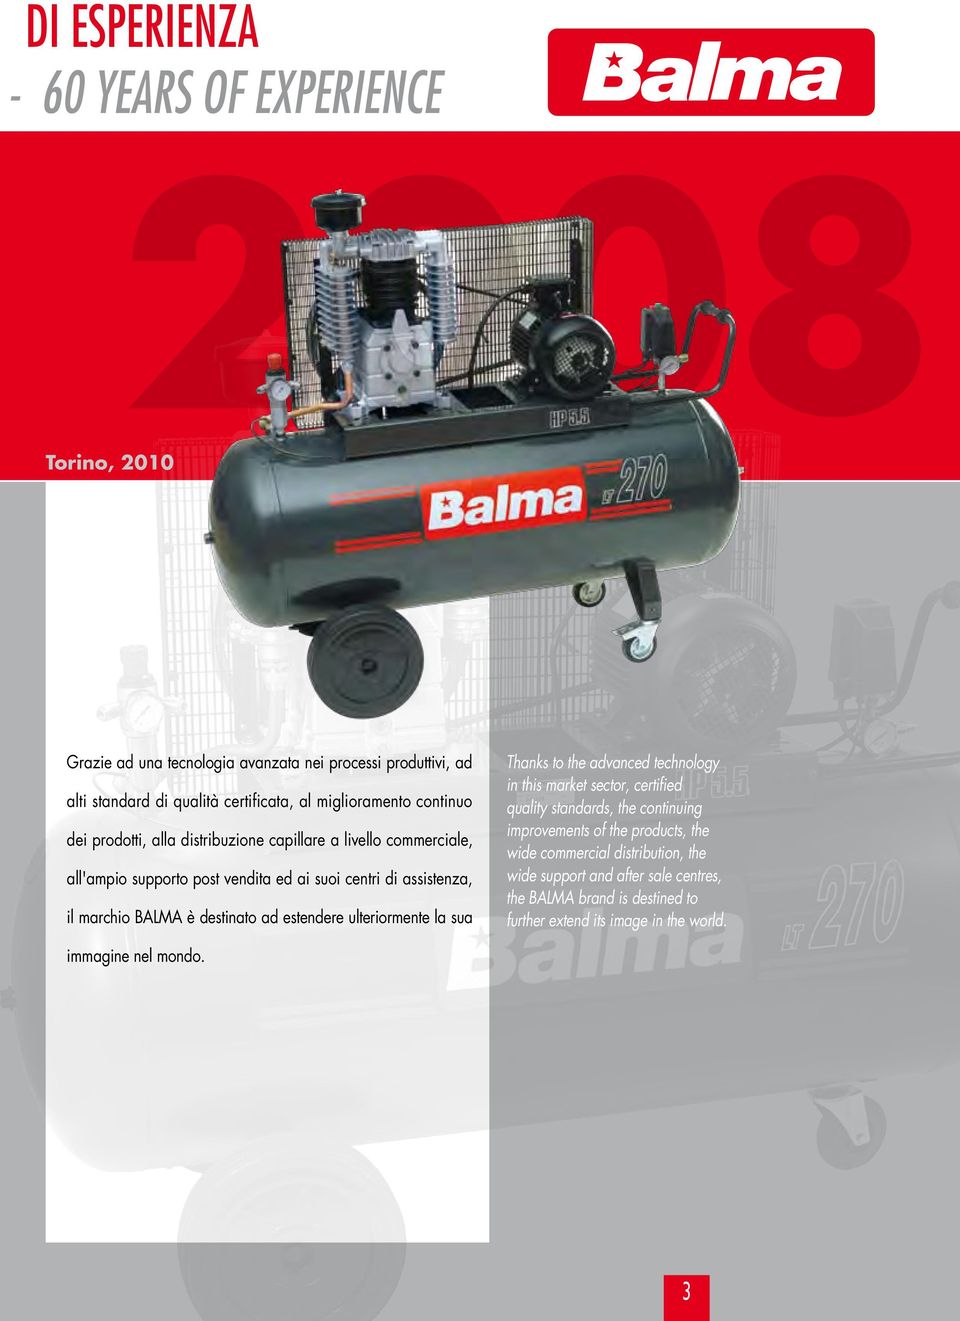 BALMA è destinato ad estendere ulteriormente la sua Thanks to the advanced technology in this market sector, certified quality standards, the continuing improvements